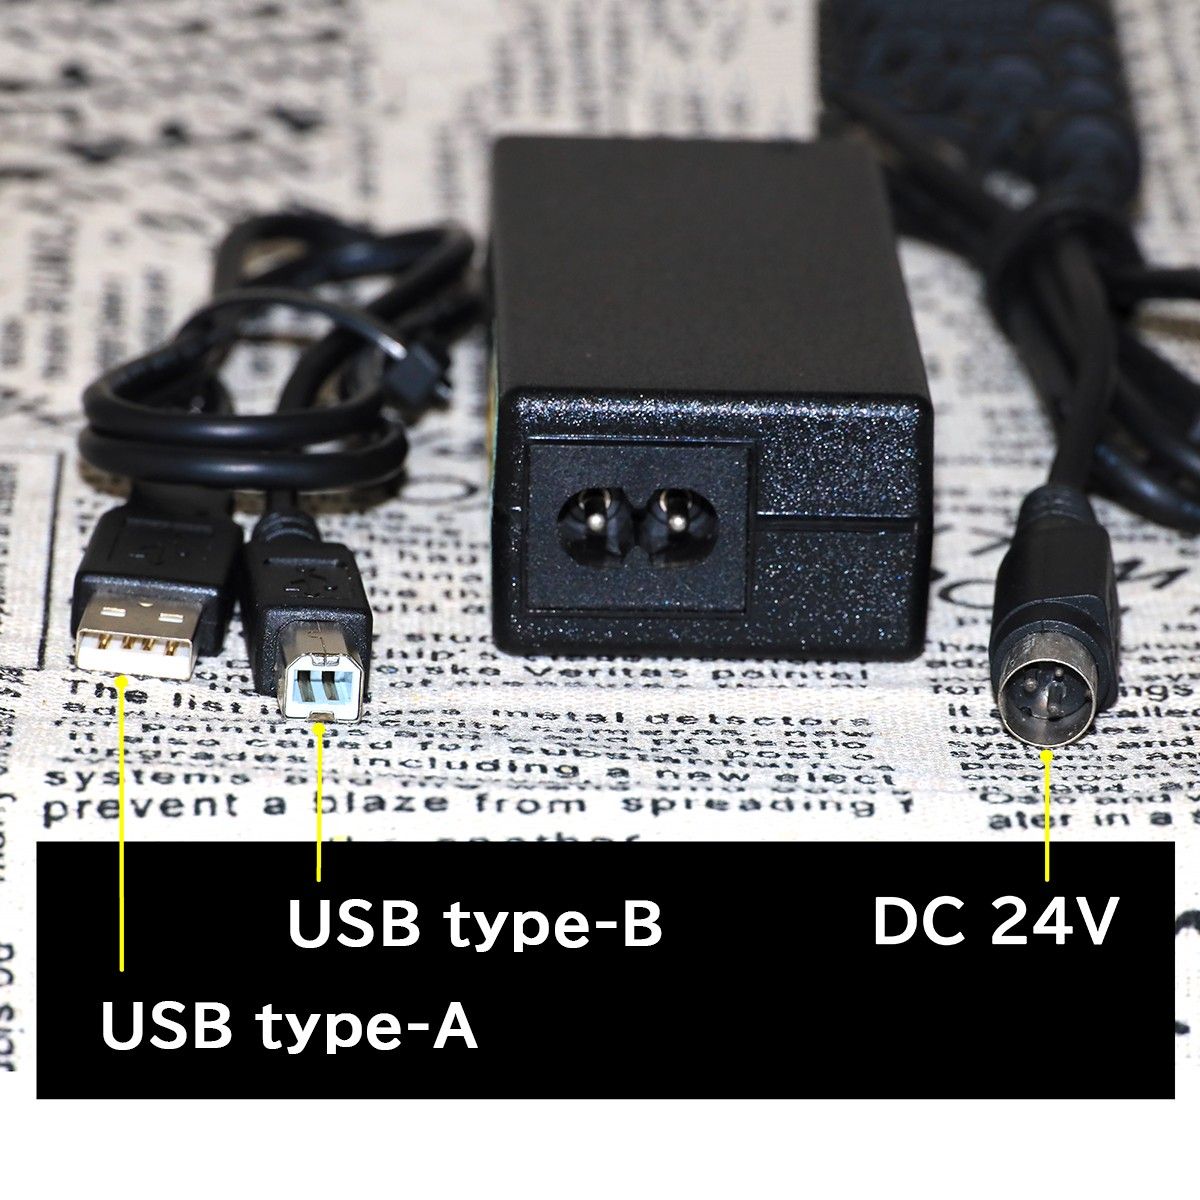 SII RP-E11 (中古)　サーマルプリンター　USB接続　感熱ロール紙付き